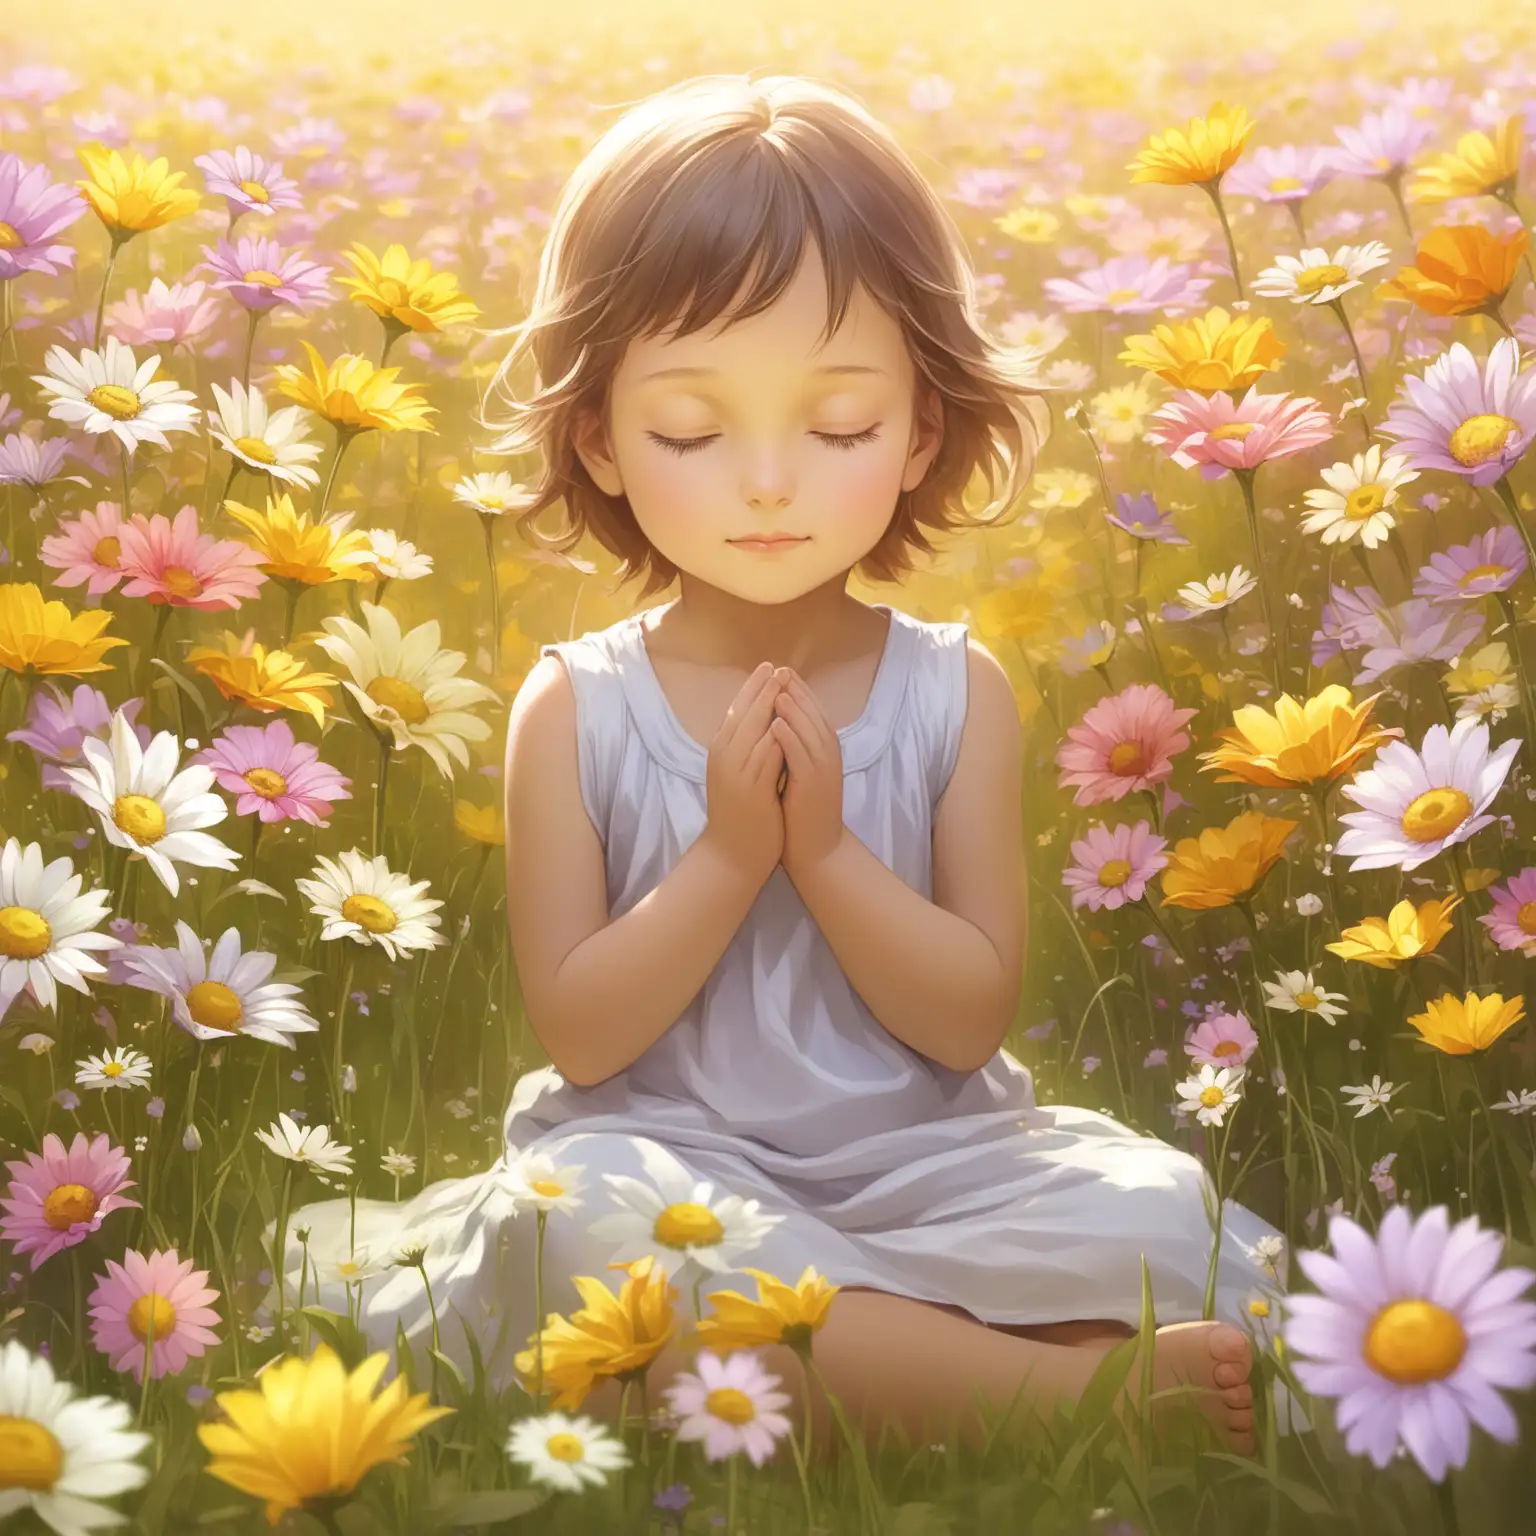 Child Reflecting in Serene Flower Field